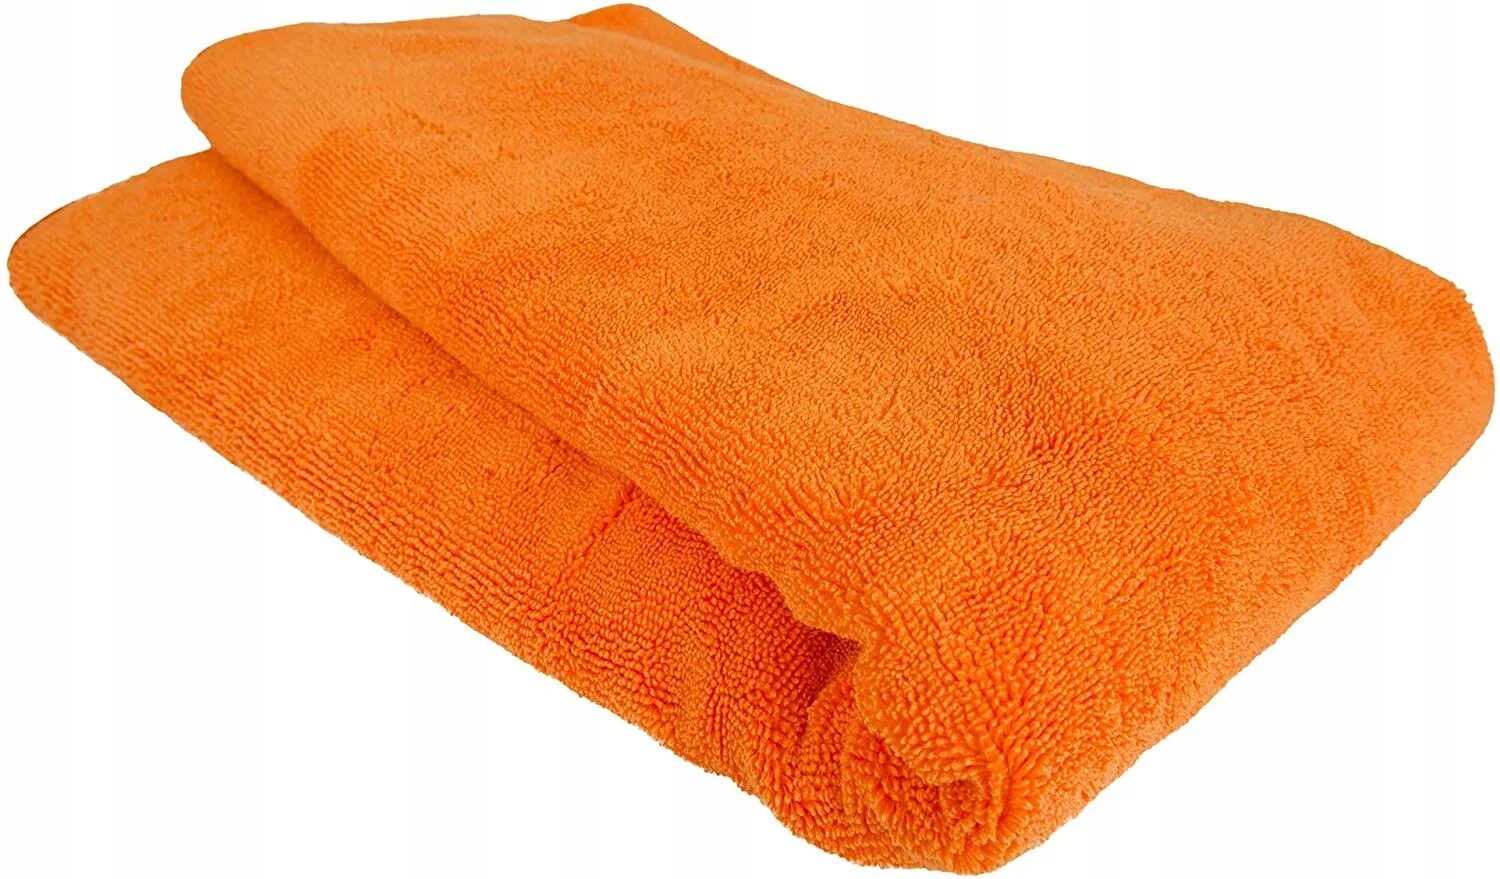 Полотенце Towel Microfiber оранжевый. Микрофибра. Салфетки микрофибра оранжевые. Полотенце микрофибра оранжевое. Оранжевое полотенце